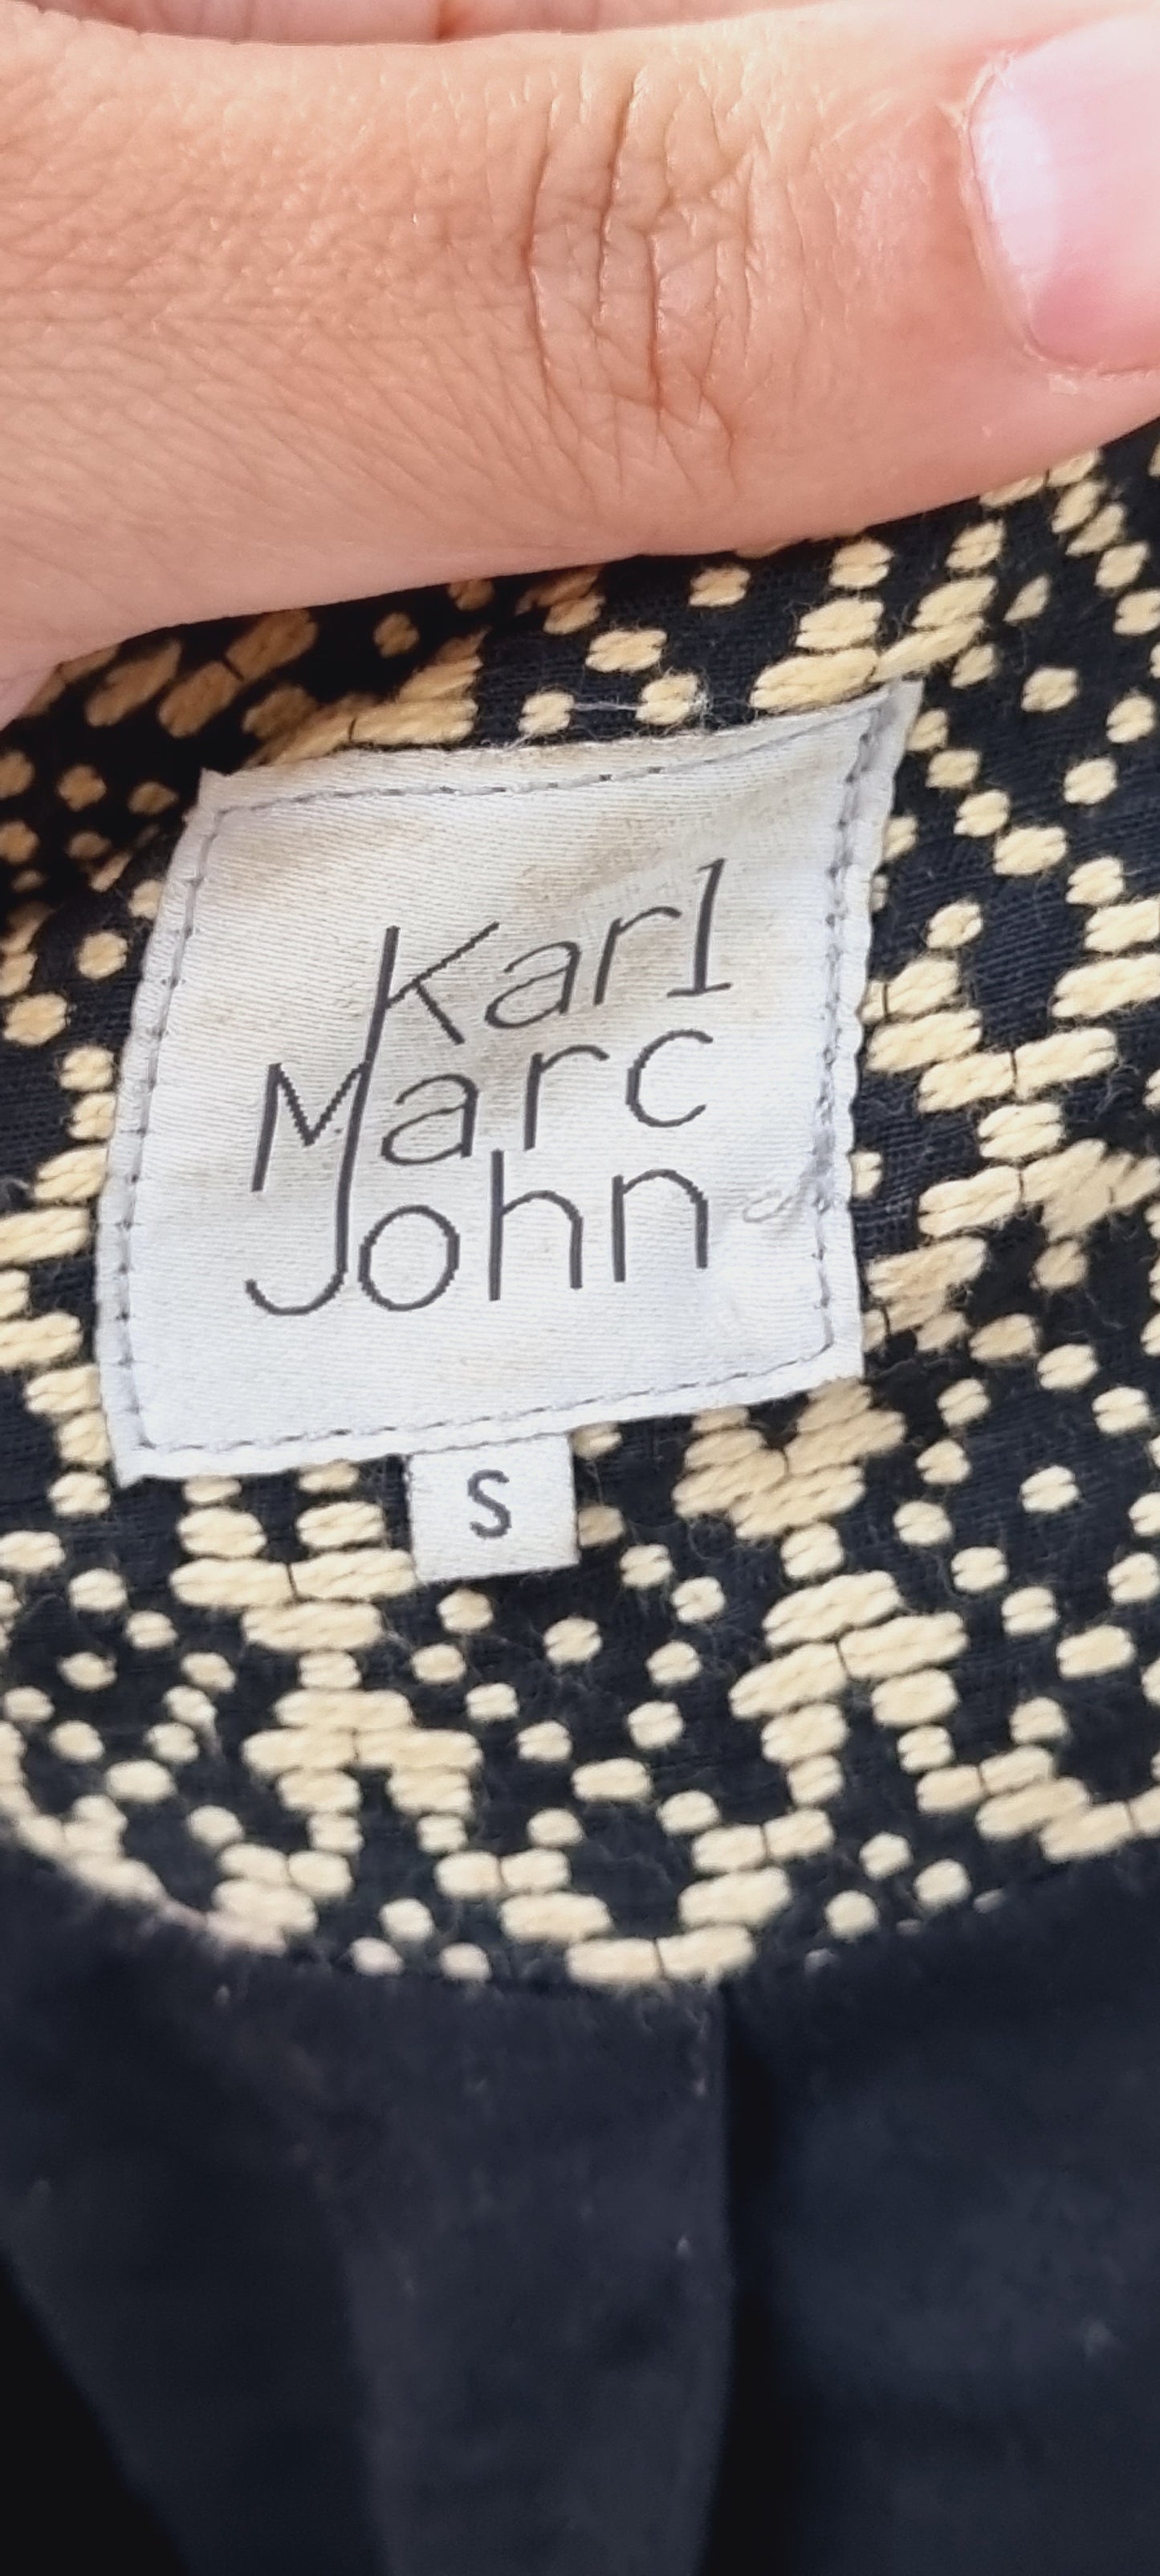 Trench Karl Marc John